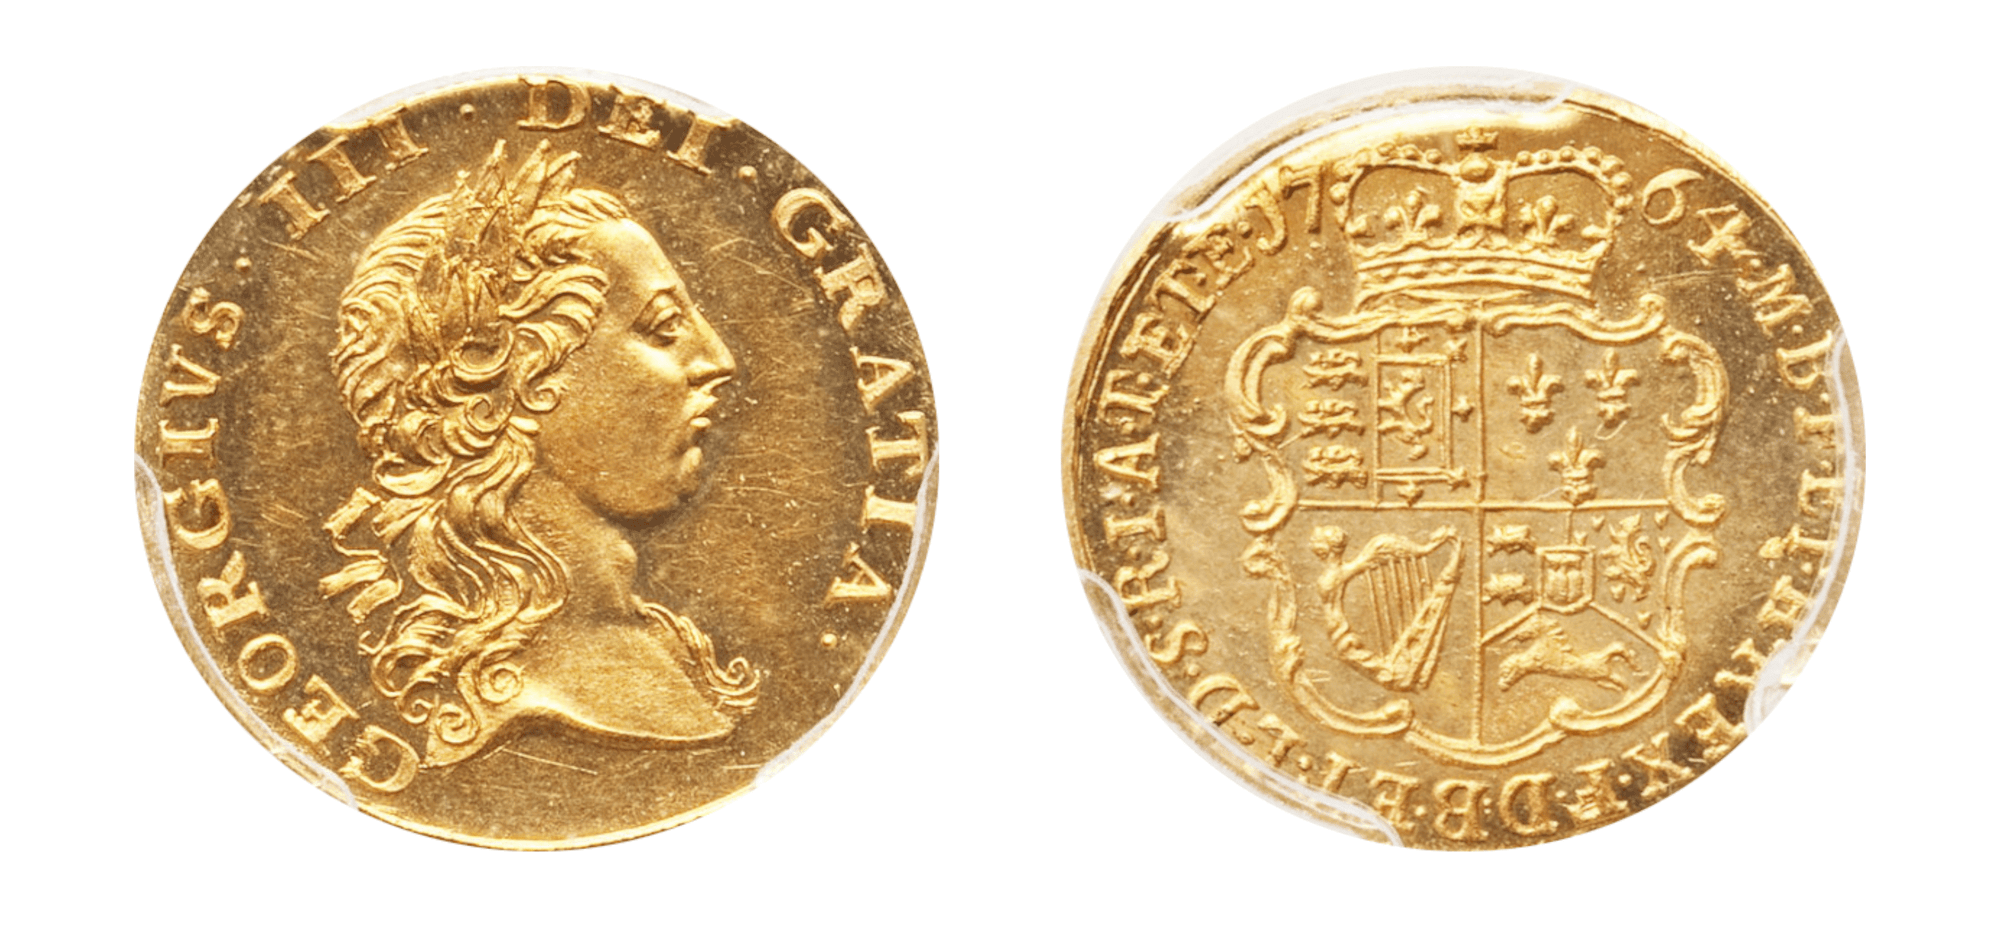 1764 George III Gold Proof Pattern 1/4 Guinea PCGS PR65 - Hard Asset Management, Inc